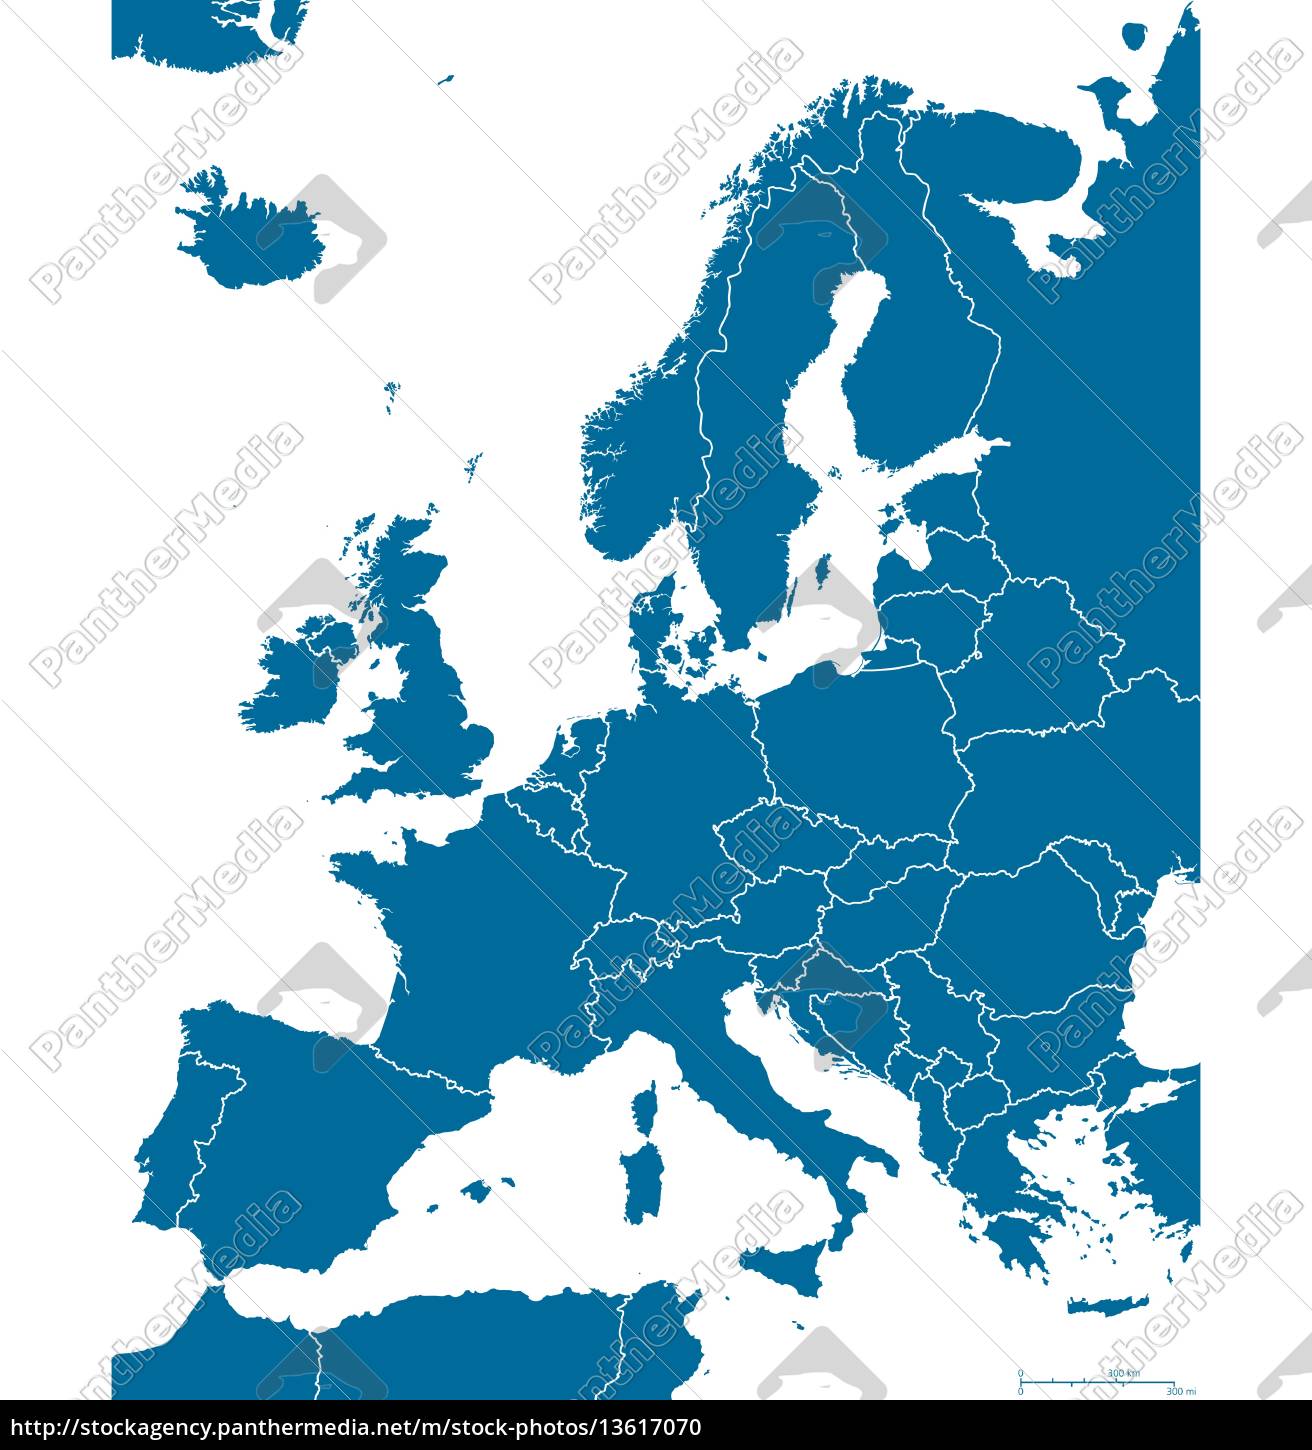 europa mapa político esquema - Stockphoto - #13617070 | Agencia de